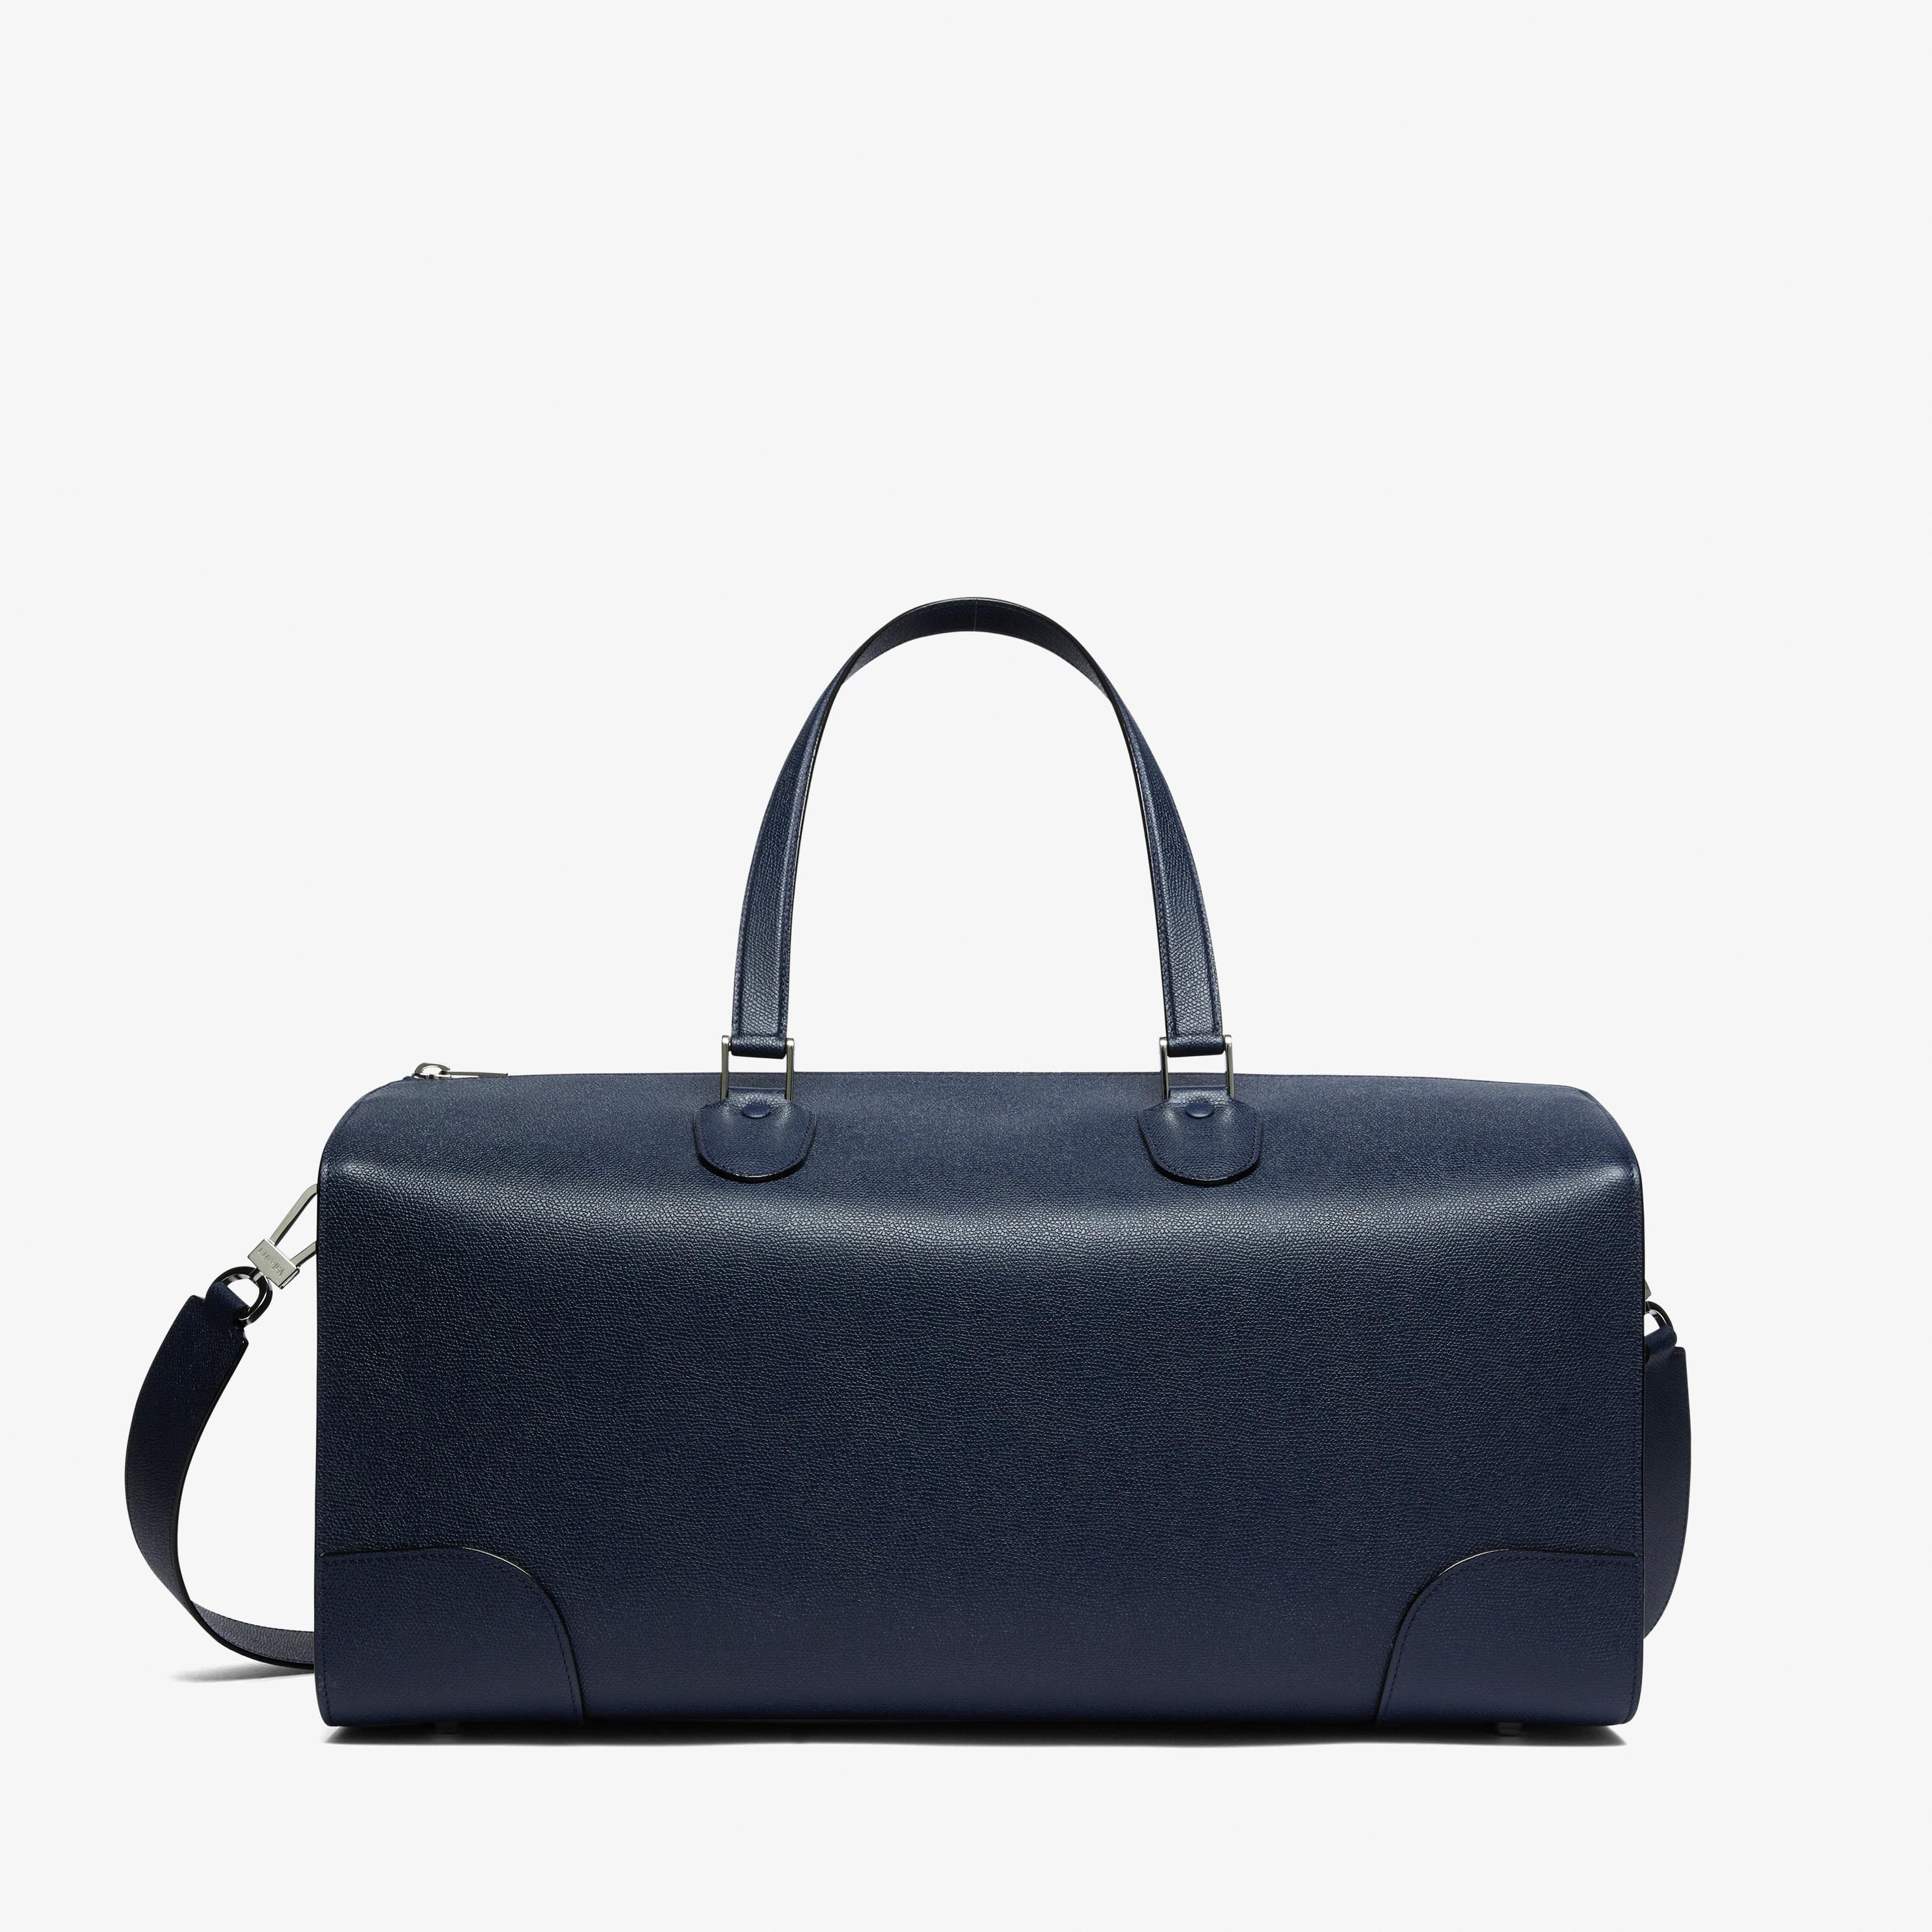 Leather travel bags, overnight bags, crossbody purses | Valextra